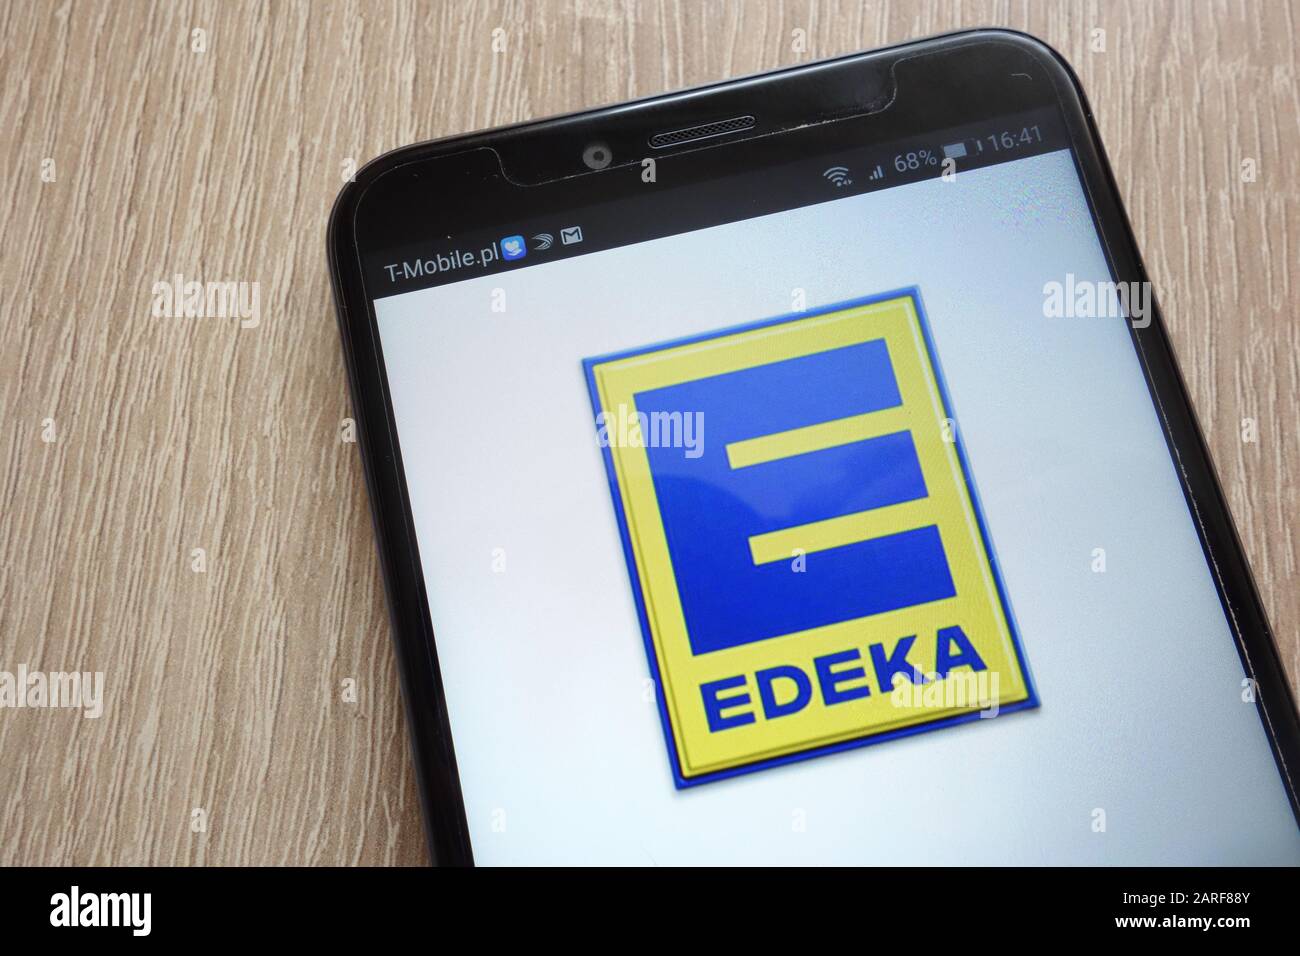 Edeka logo displayed on a modern smartphone Stock Photo